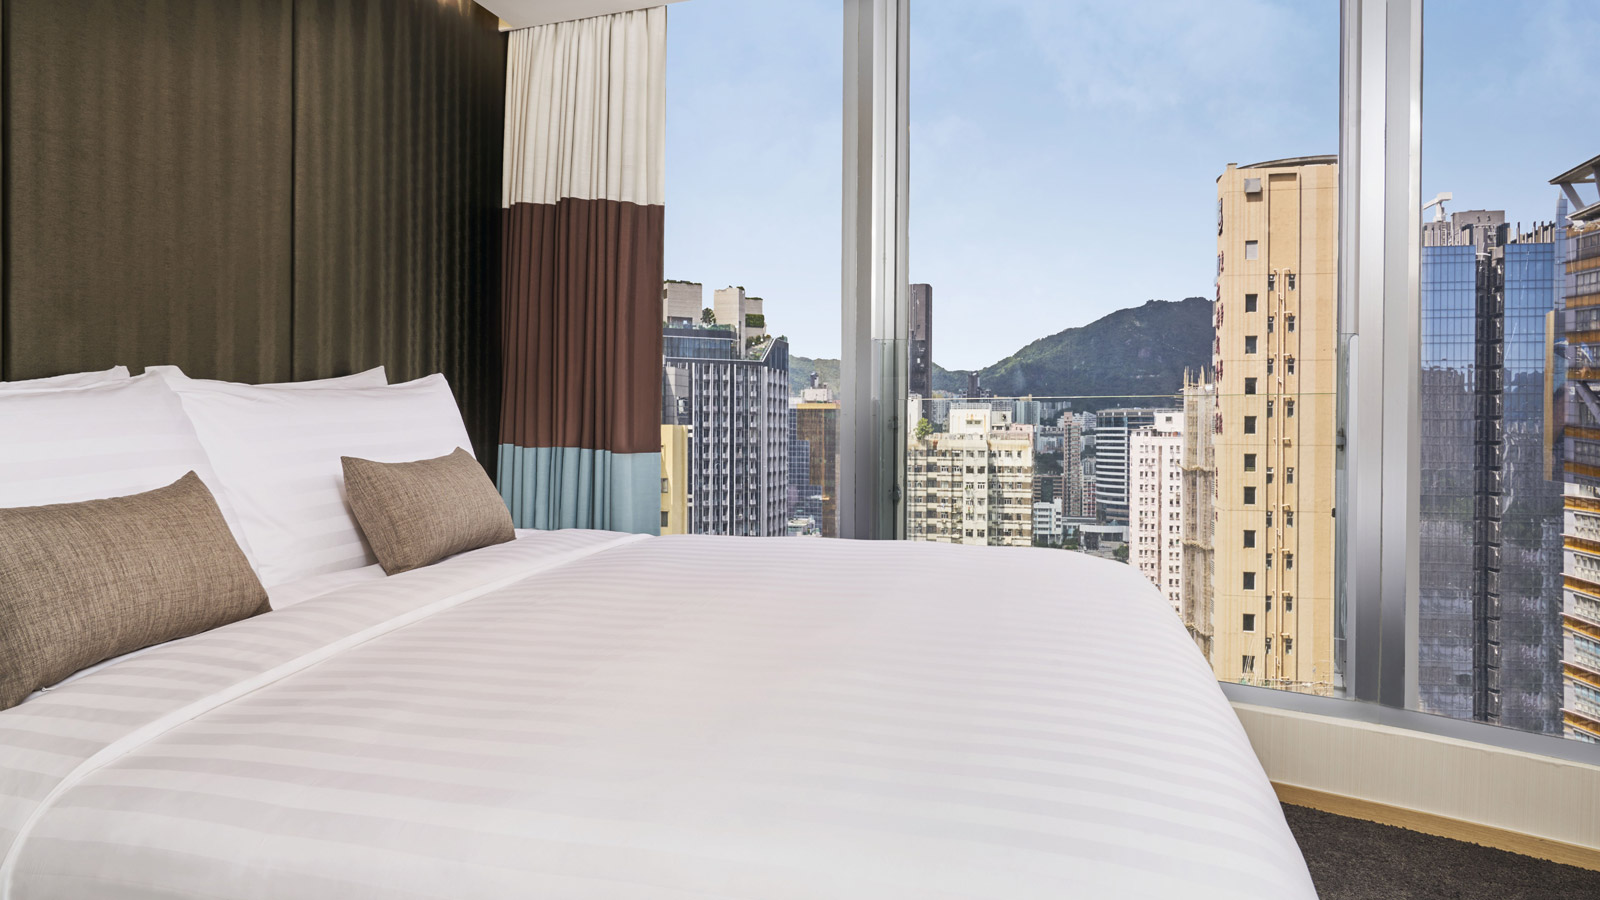 Classic - Hotel 108, Hong Kong - 호텔 108, 홍콩